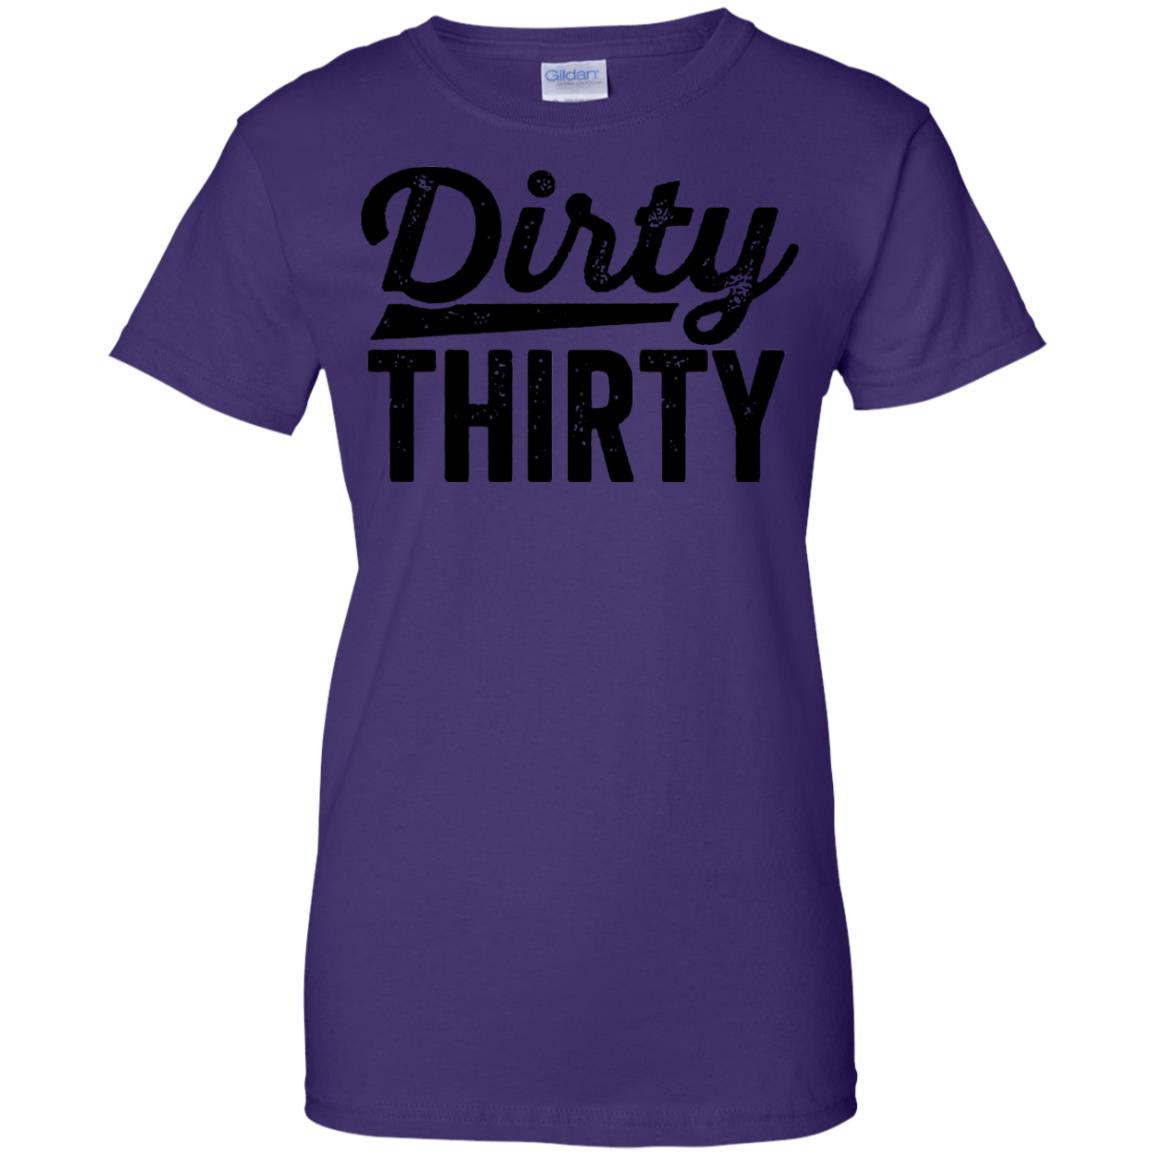 Dirty Thirty Shirts - 10% Off - FavorMerch